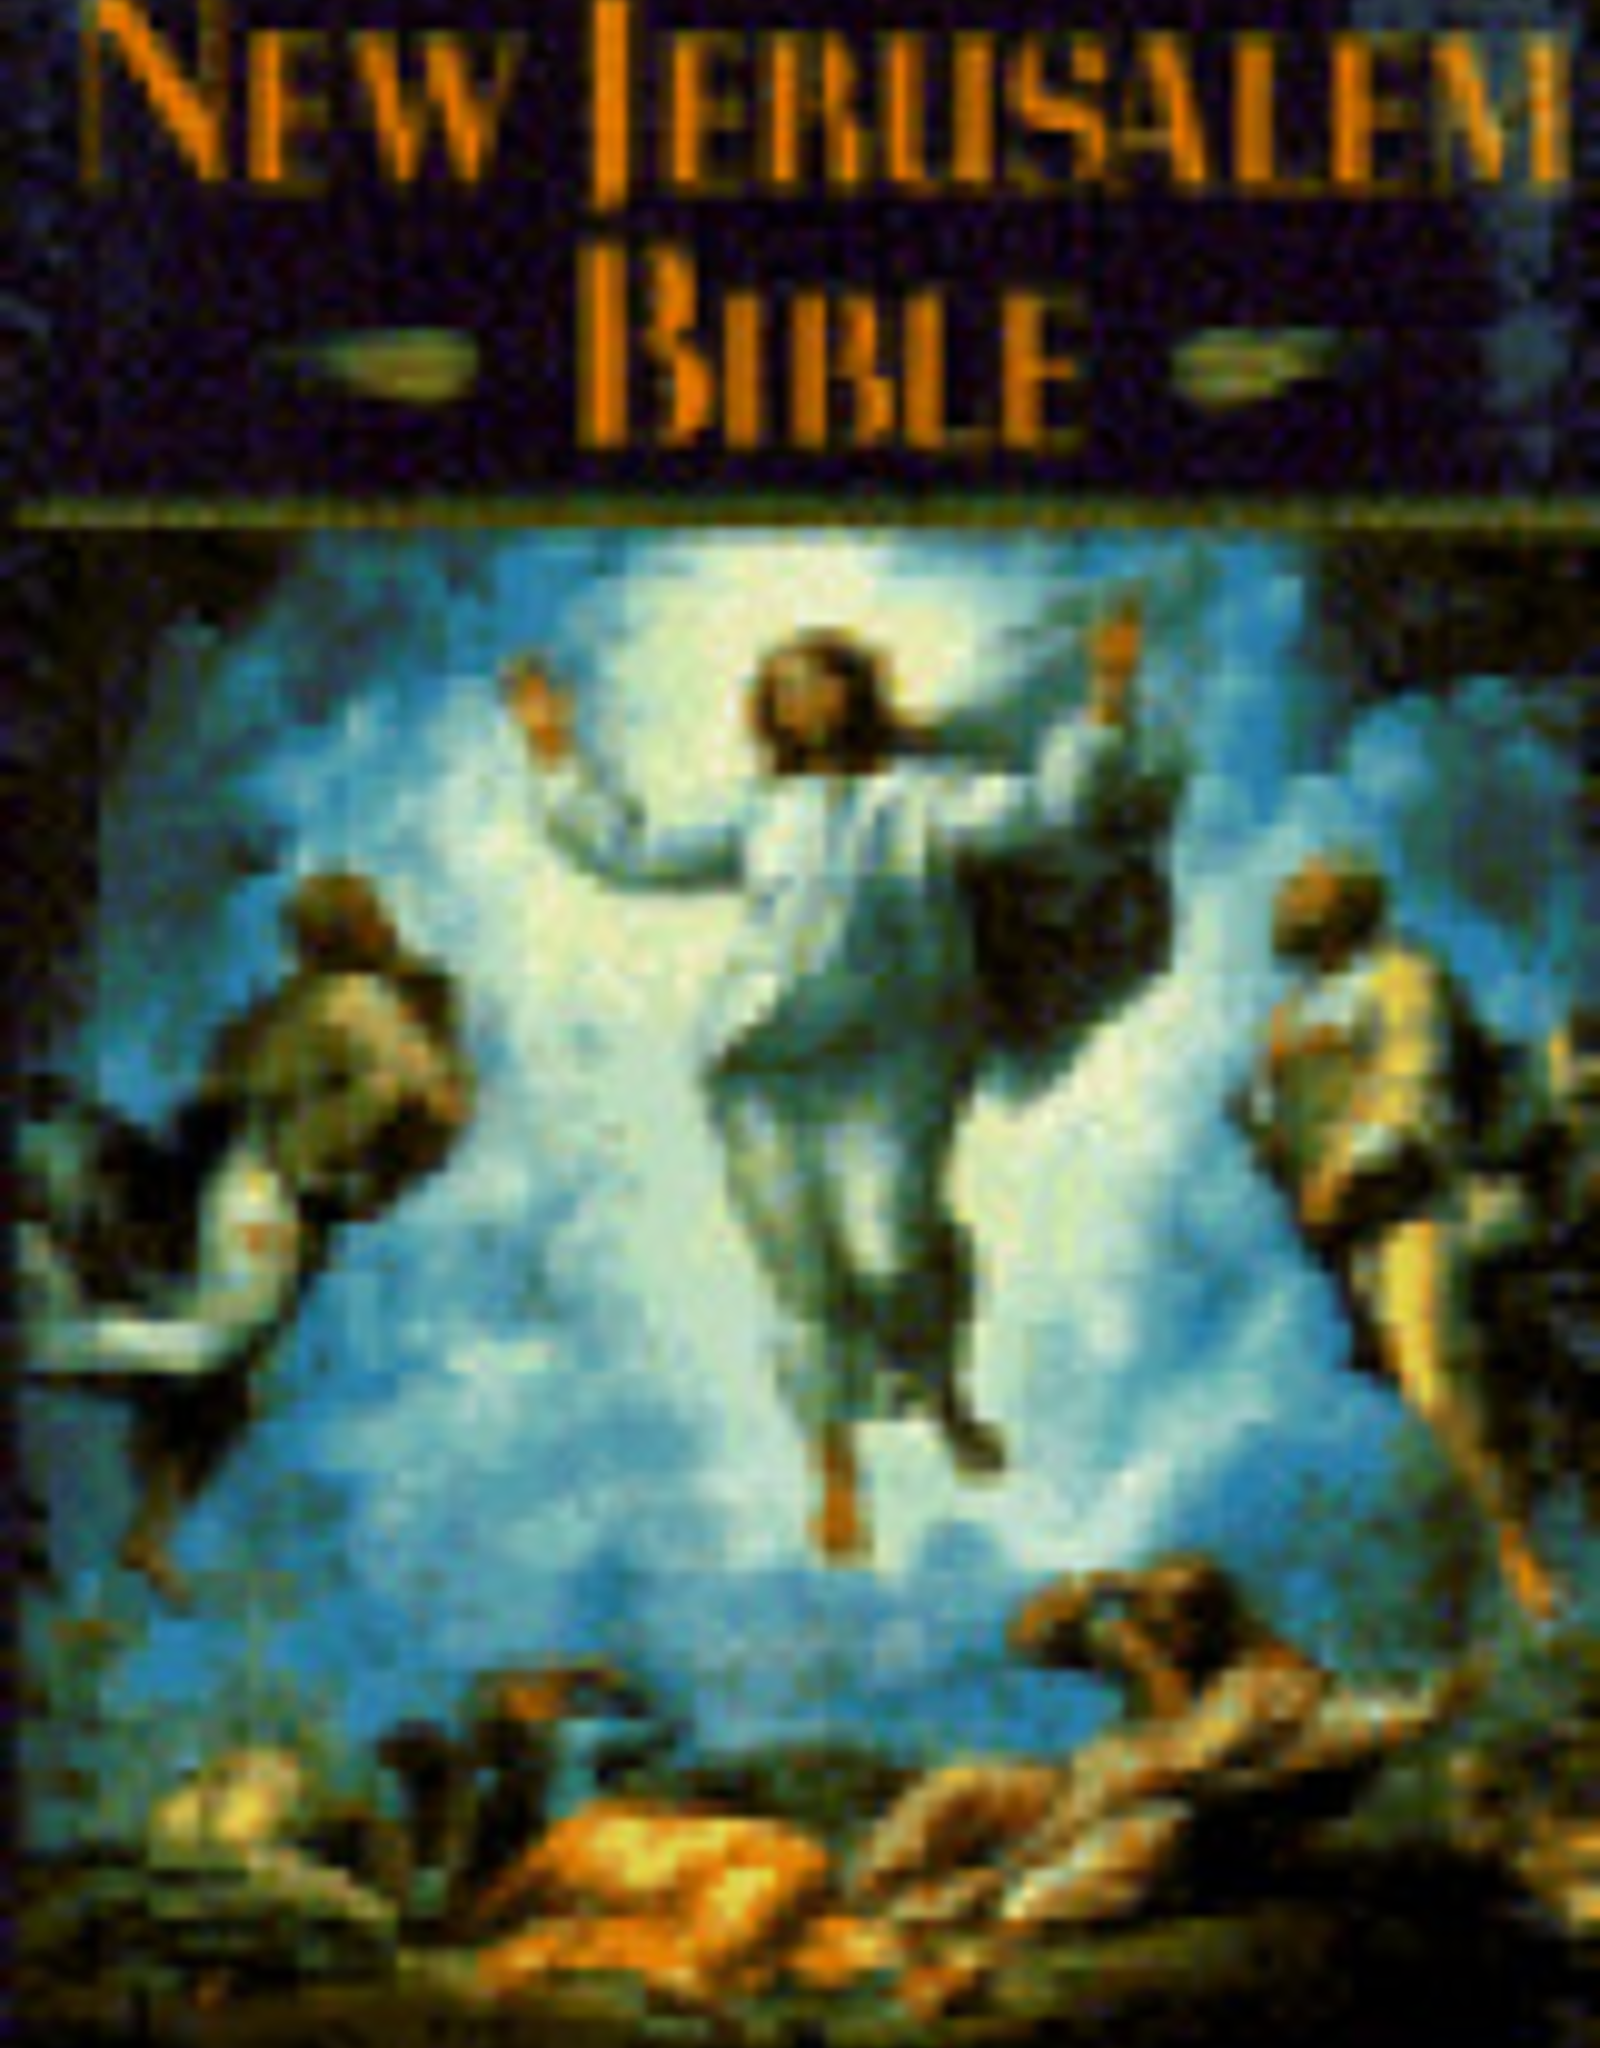 Random House The New Jerusalem Bible, by Henry Wansbrough (hardcover)